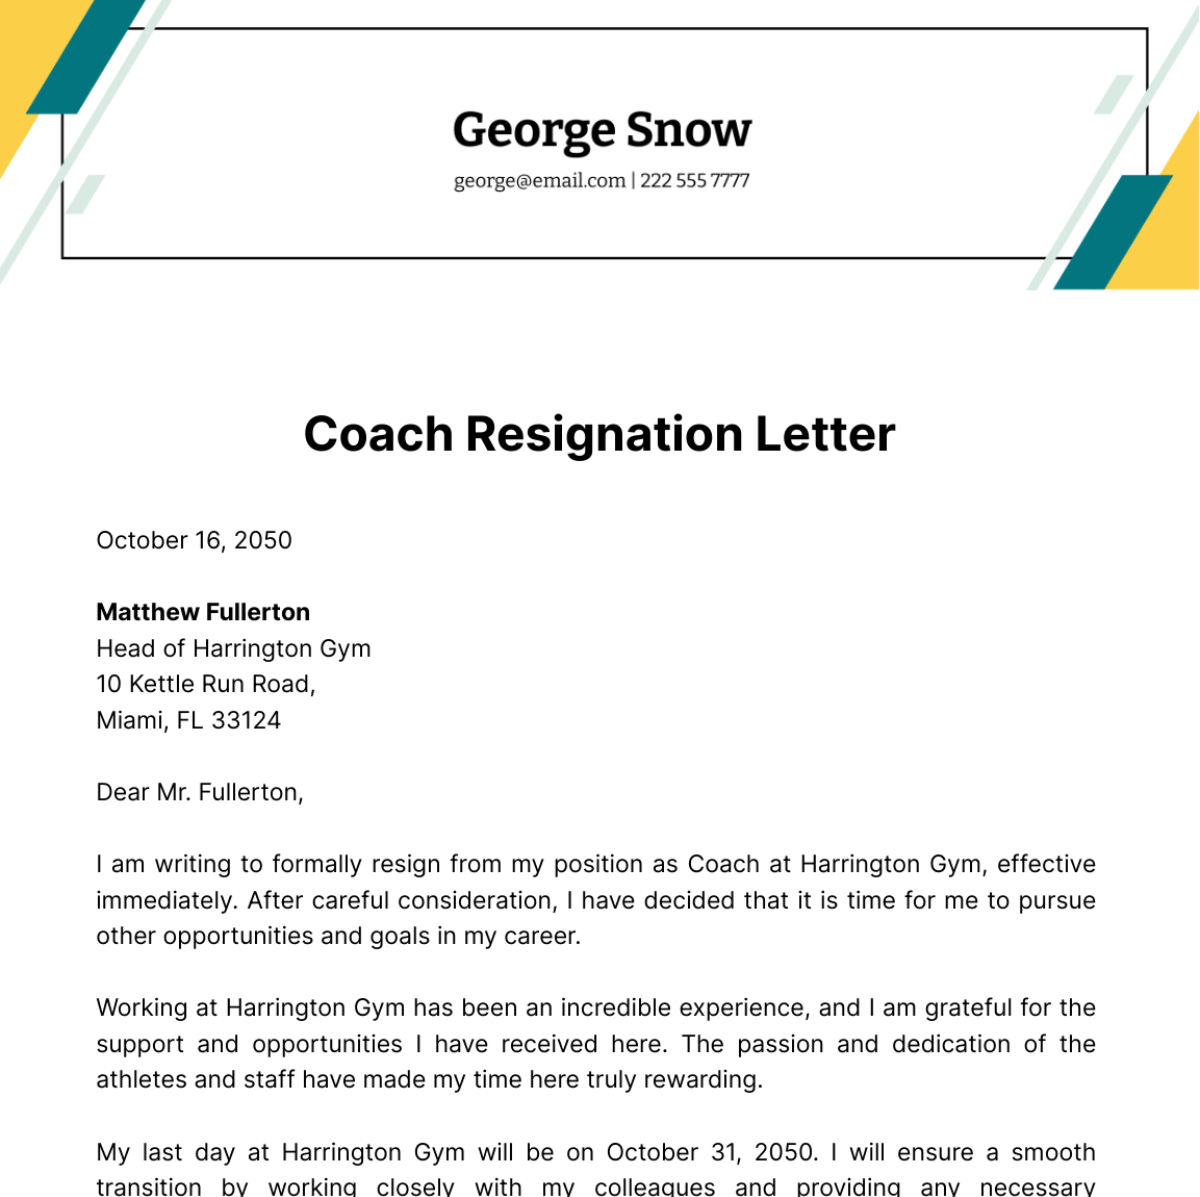 Coach Resignation Letter   Template